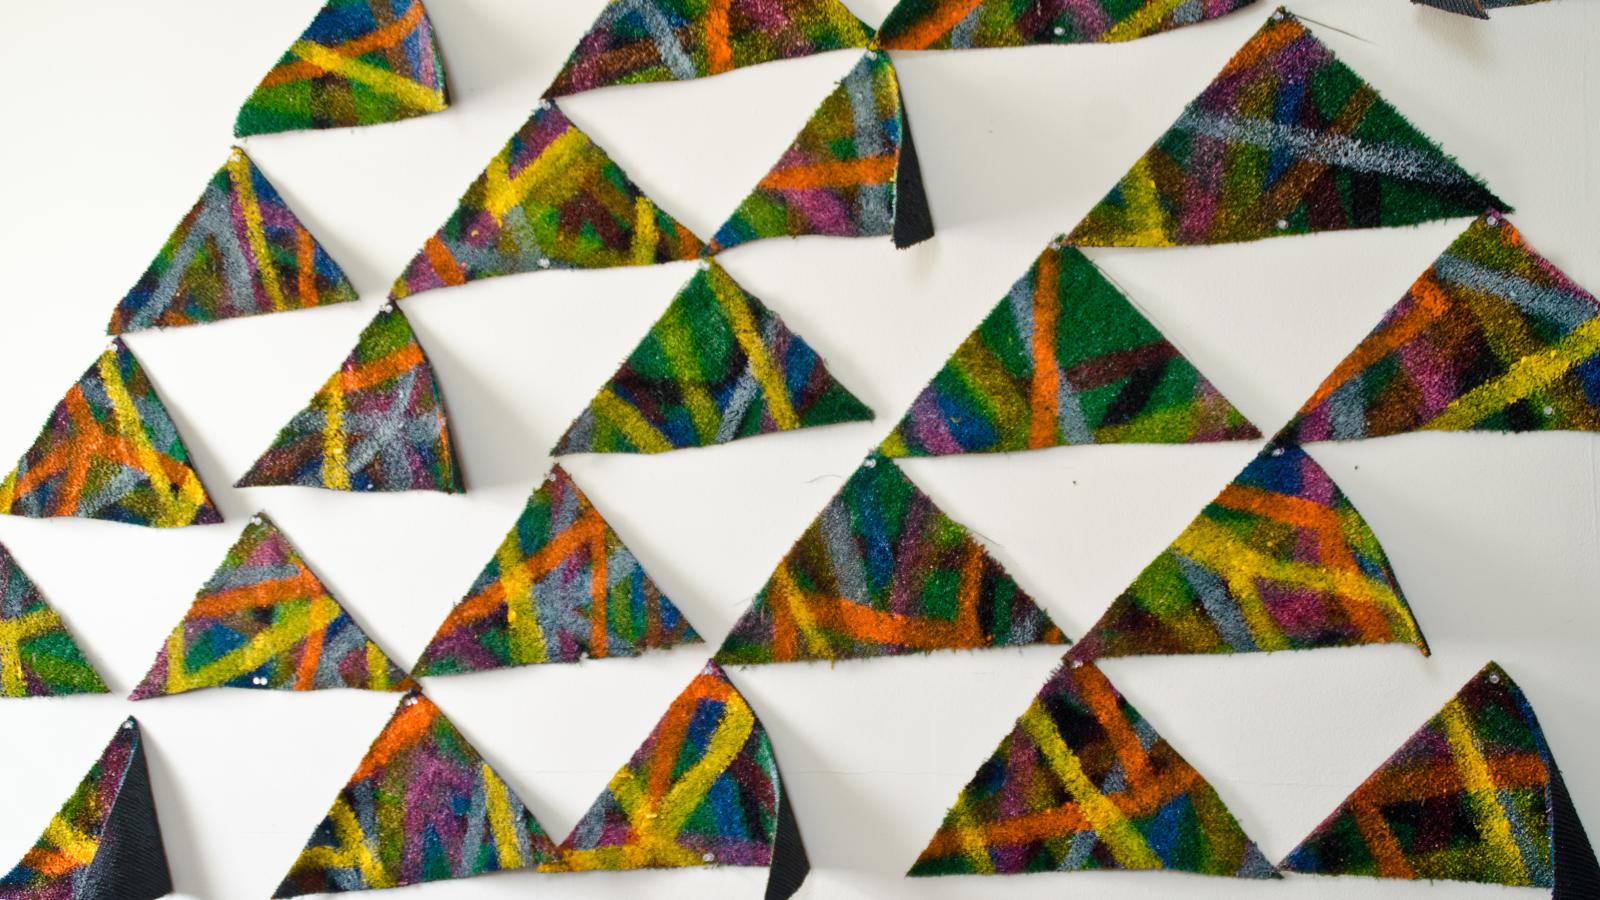 Luke Ahern: "Turf Triangles," enamel, livestock marker on shaped artificial turf, 2014 